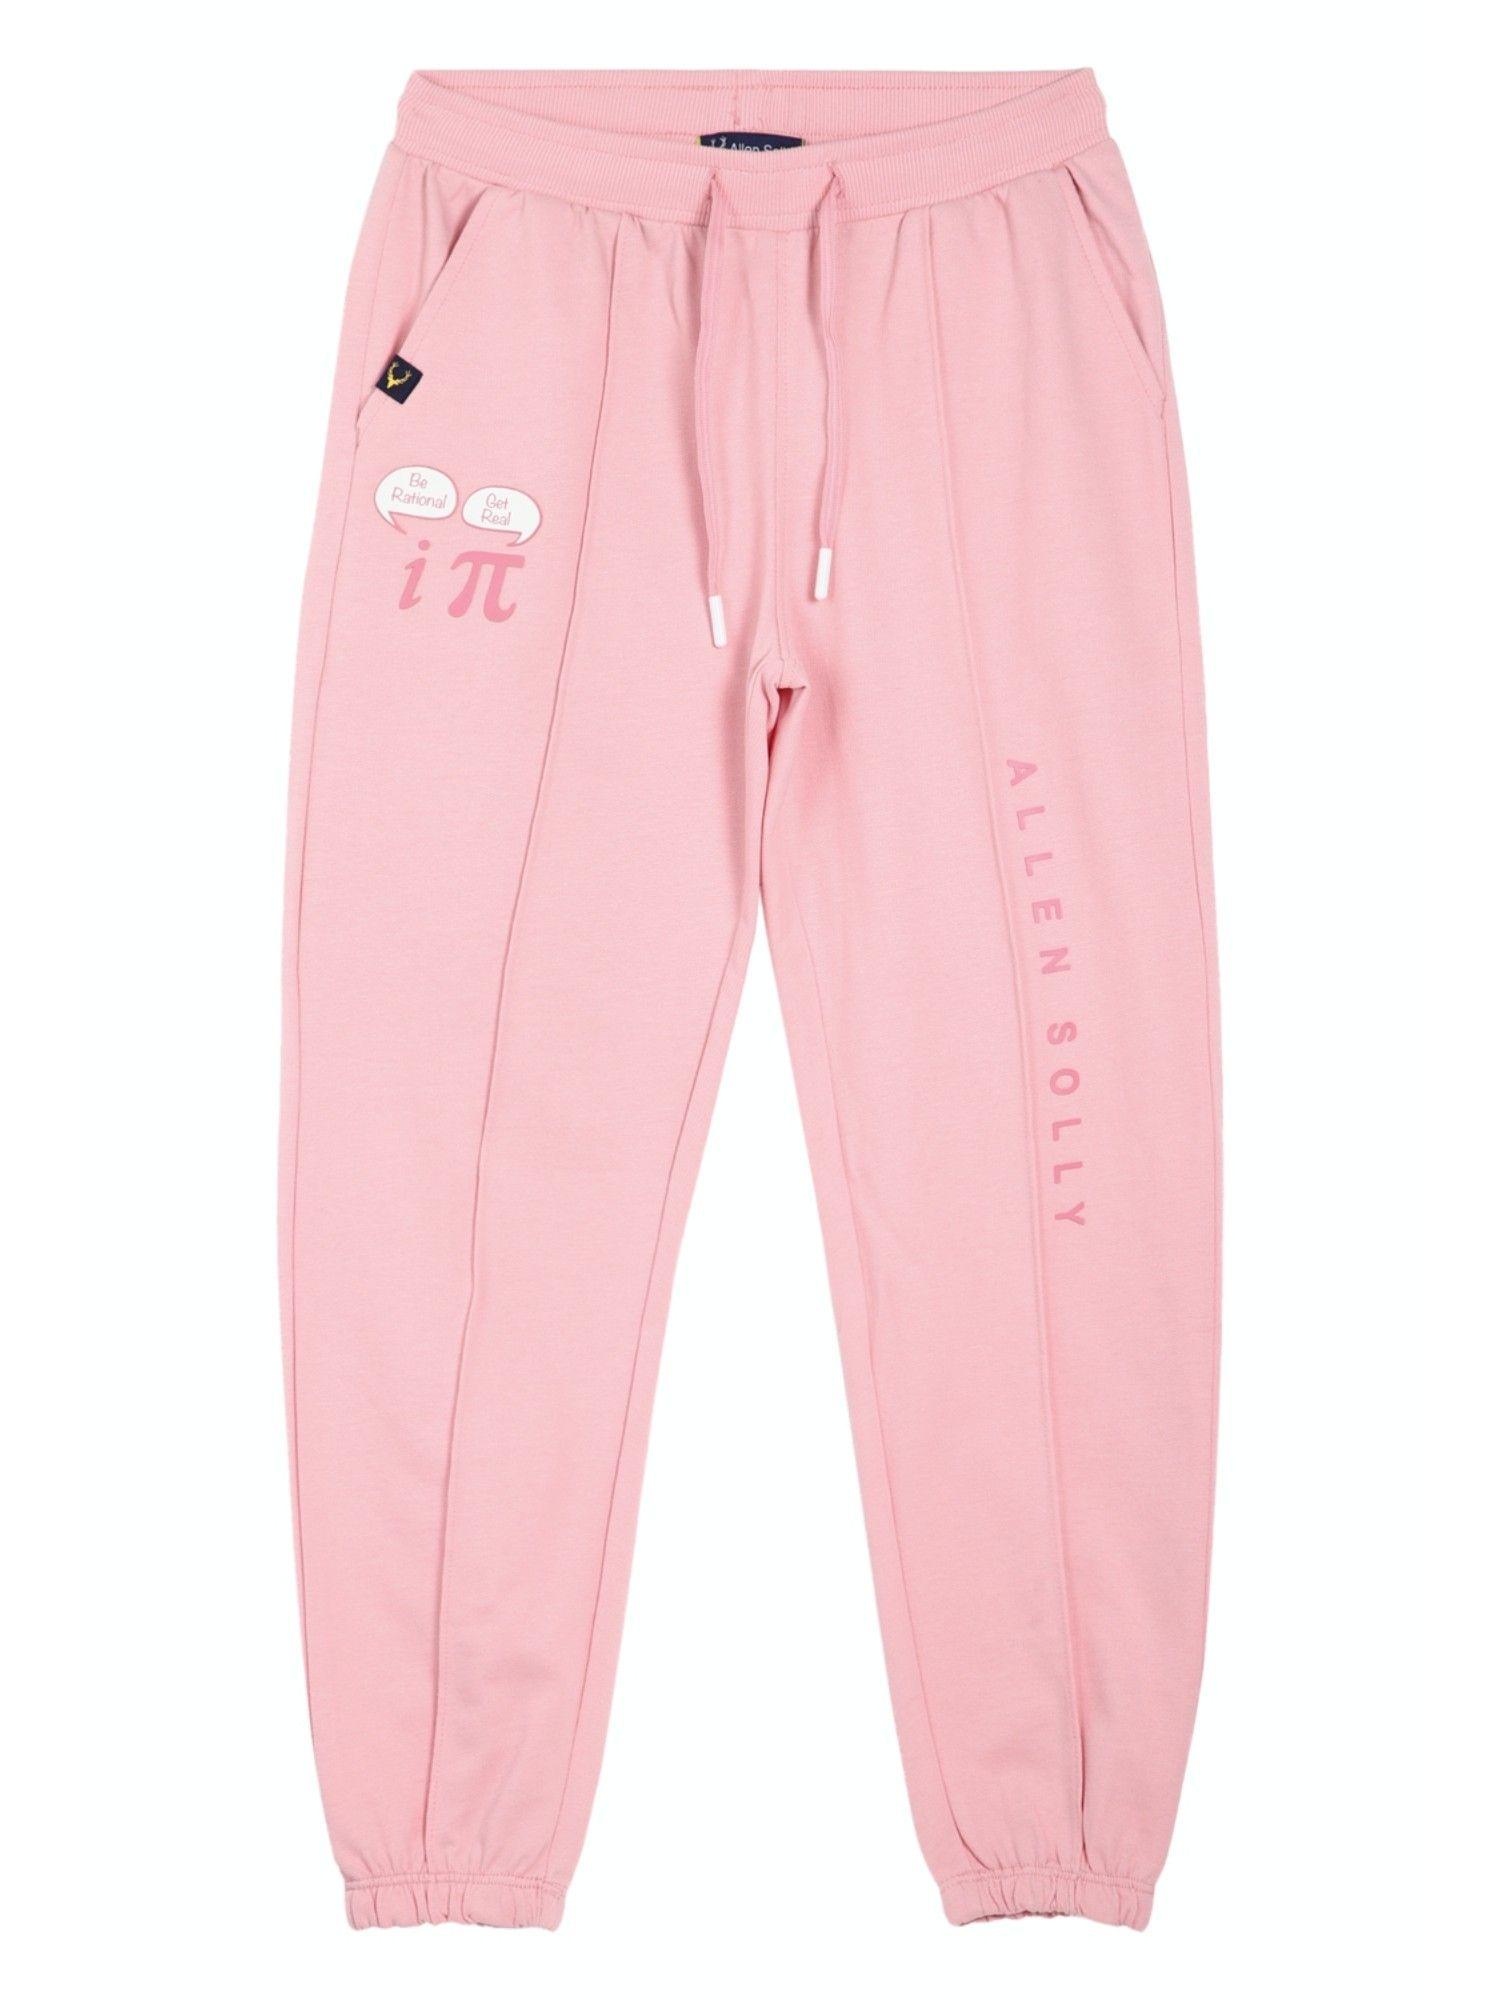 pink-track-pants